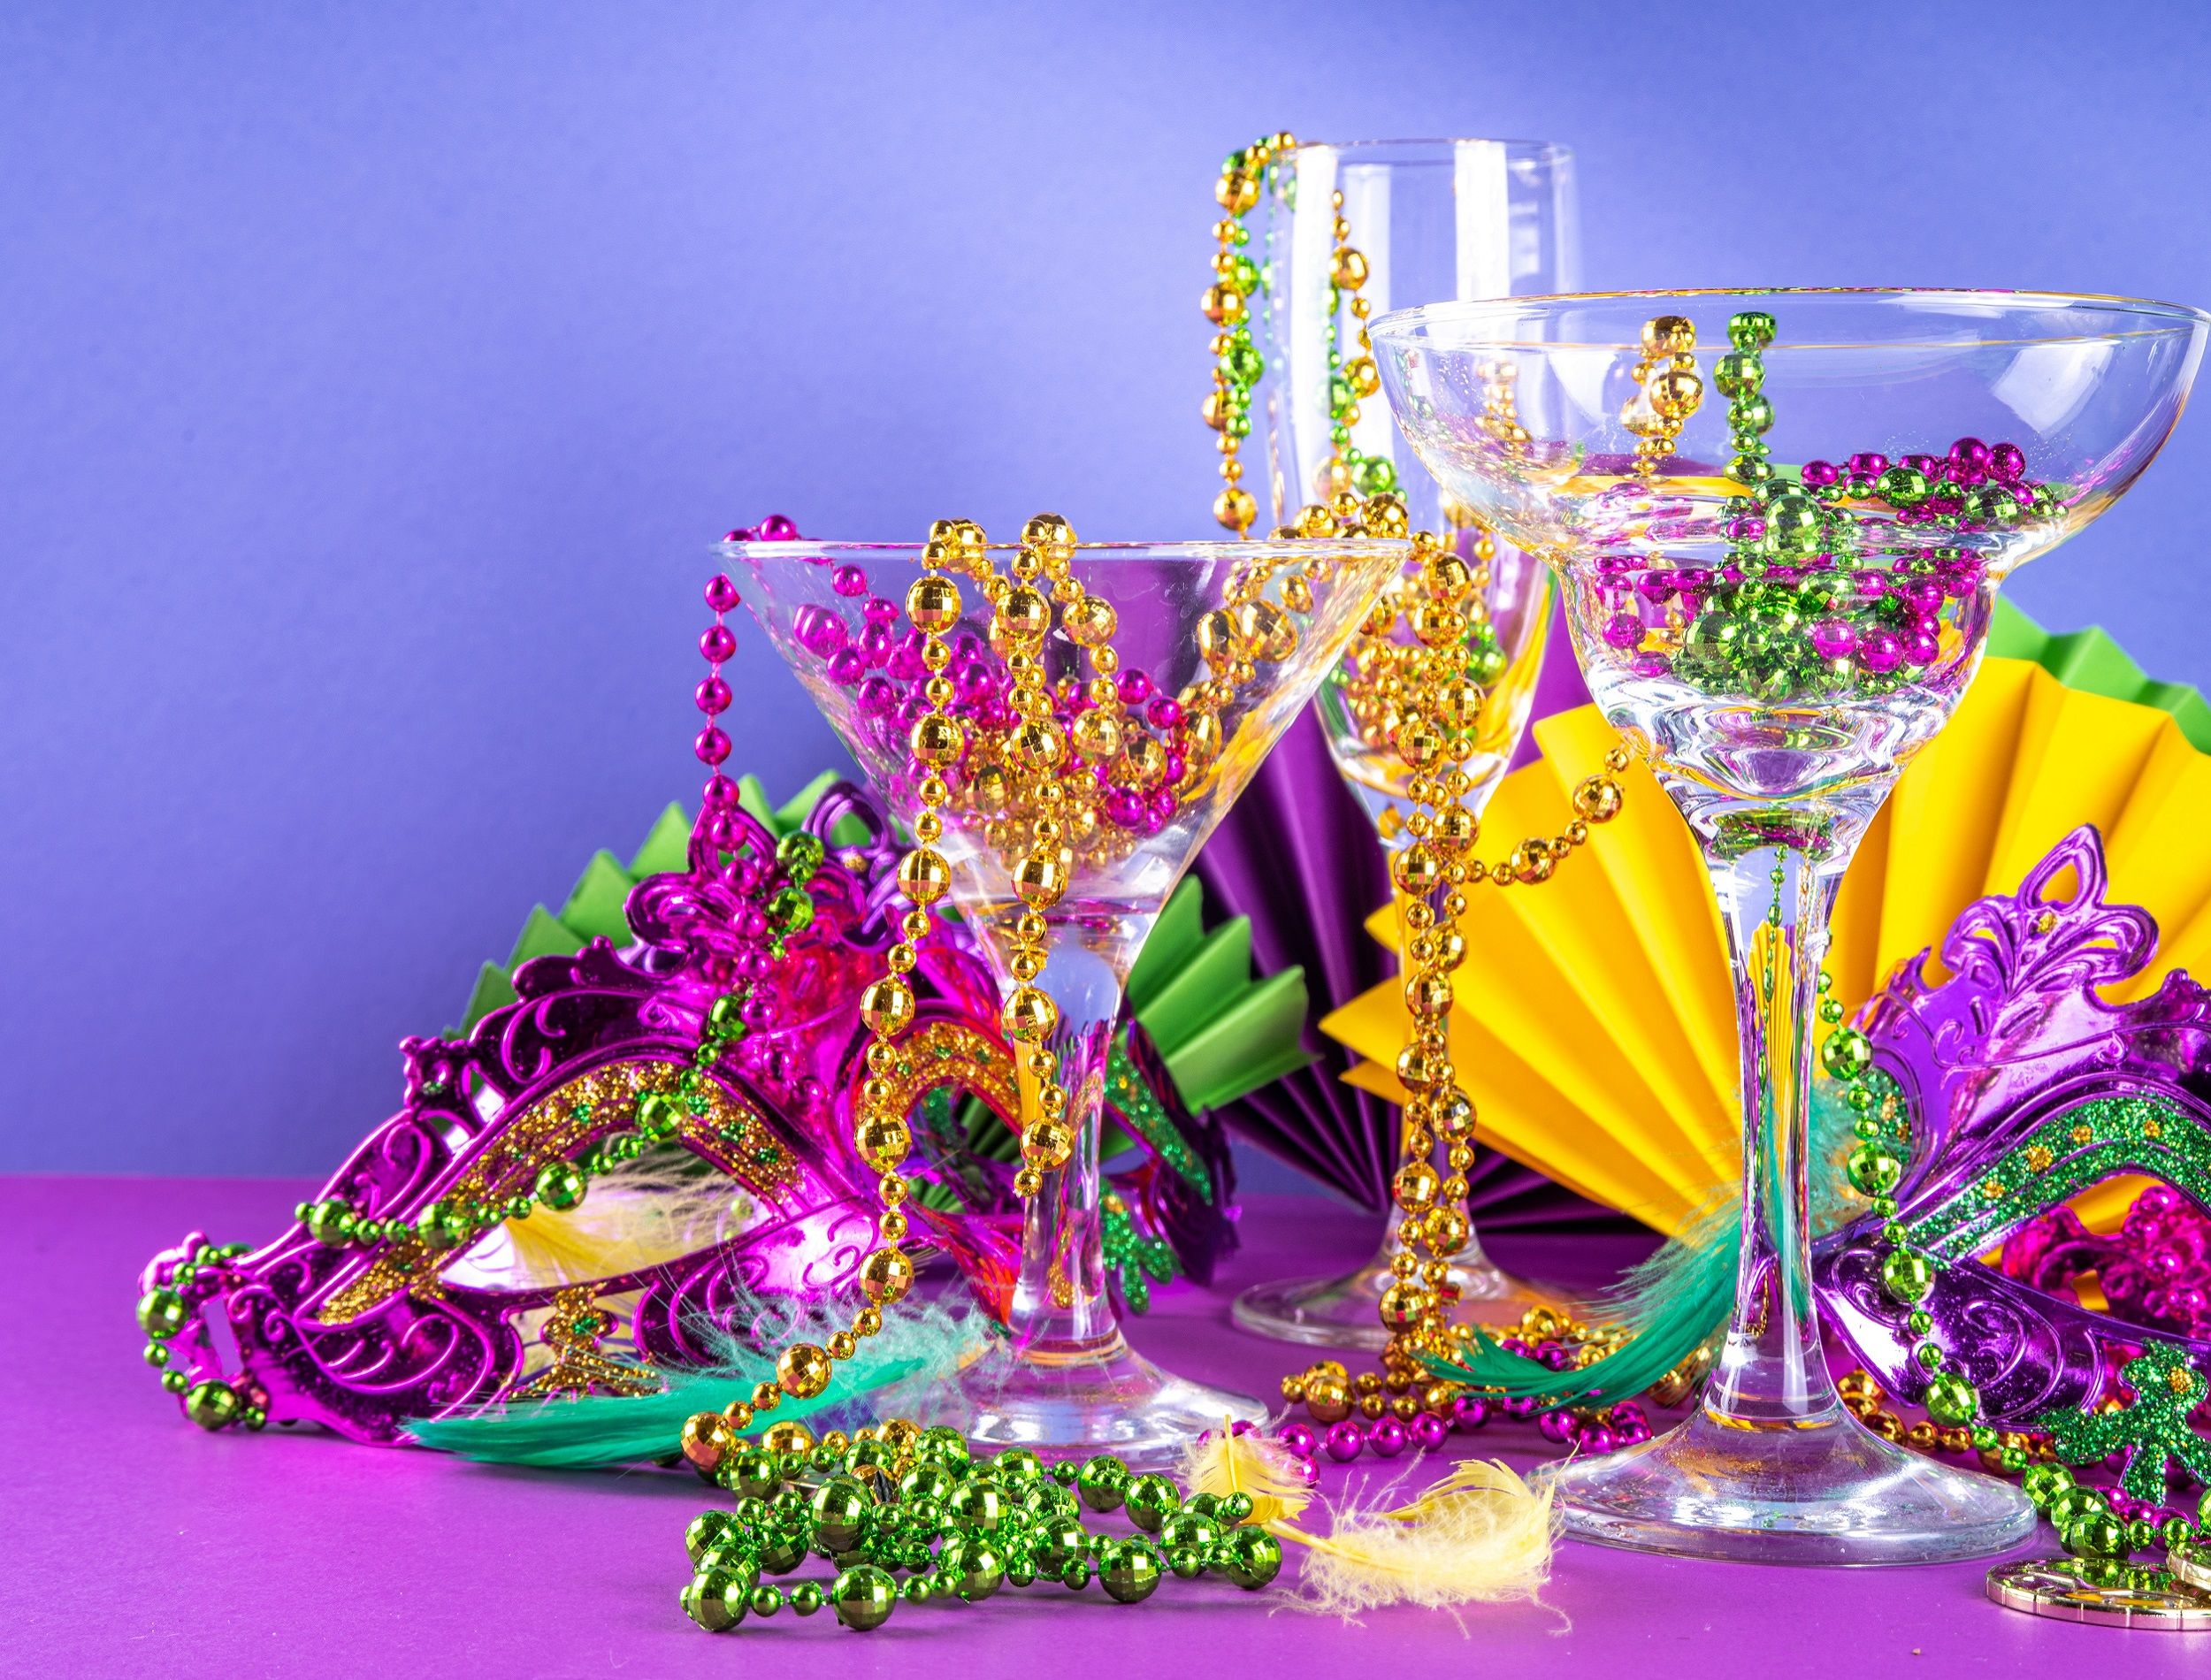 Mardis Gras items on a purple background